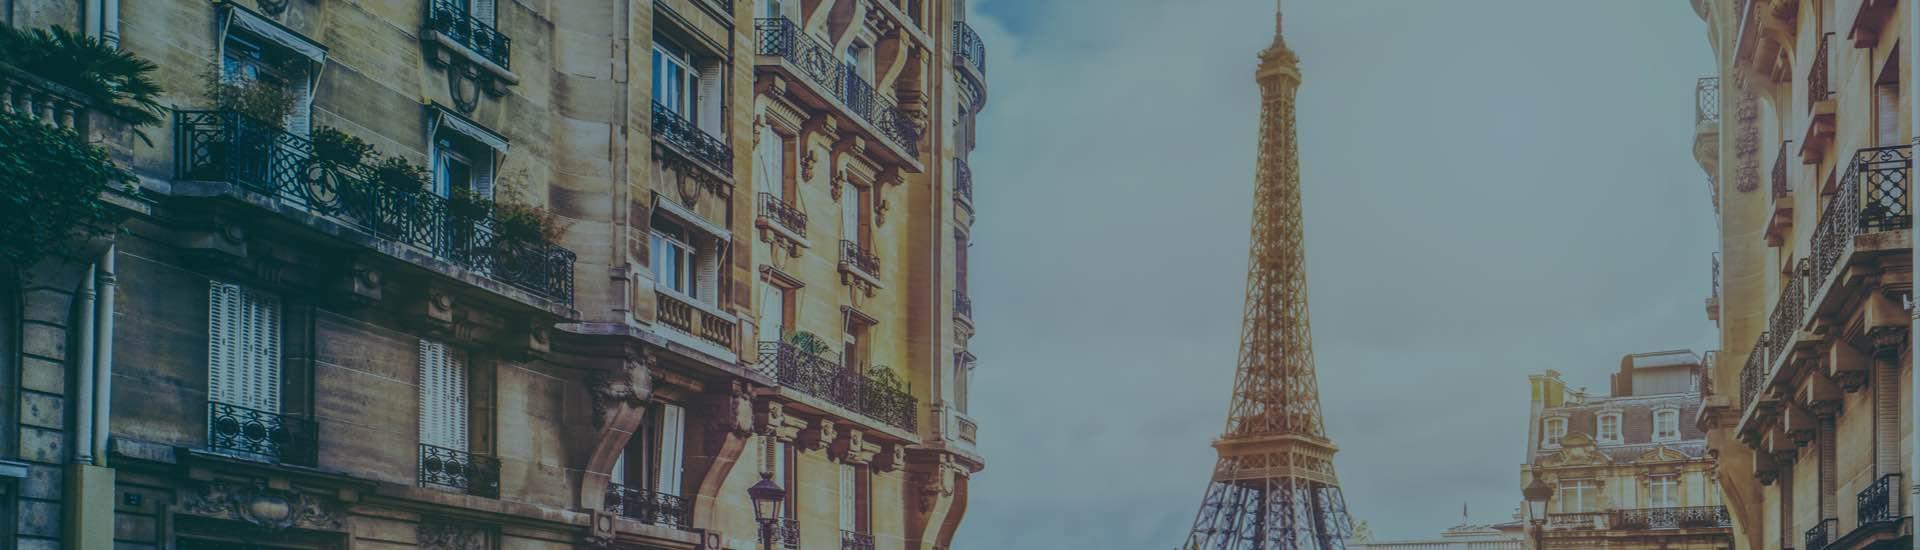 Find the Best Hotels in Paris